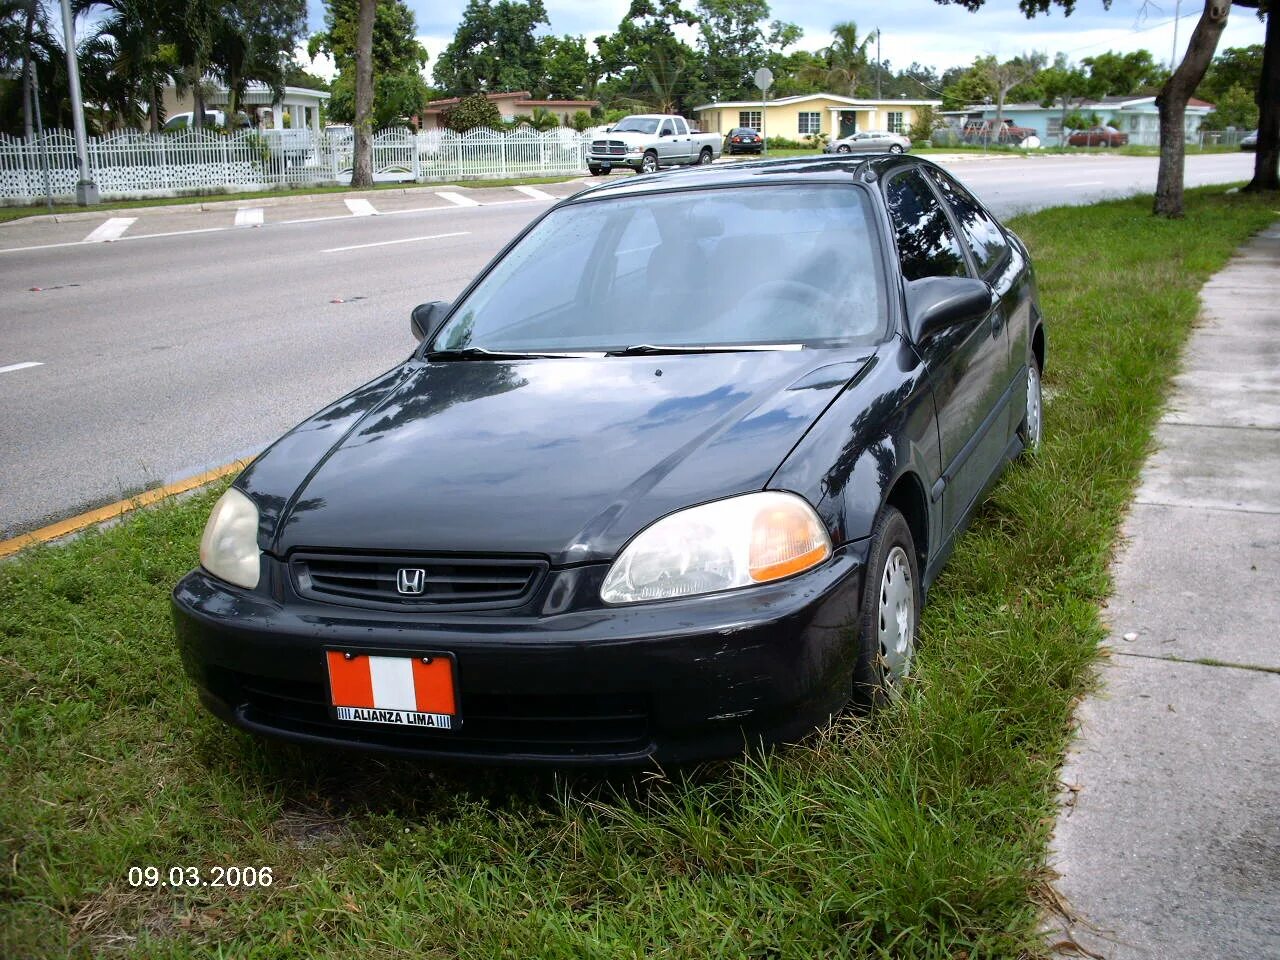 Honda Civic Coupe 1996. Хонда Цивик 1996 седан. Civic купе 1996. Хонда Цивик купе 1996-2000г. Honda 96 год